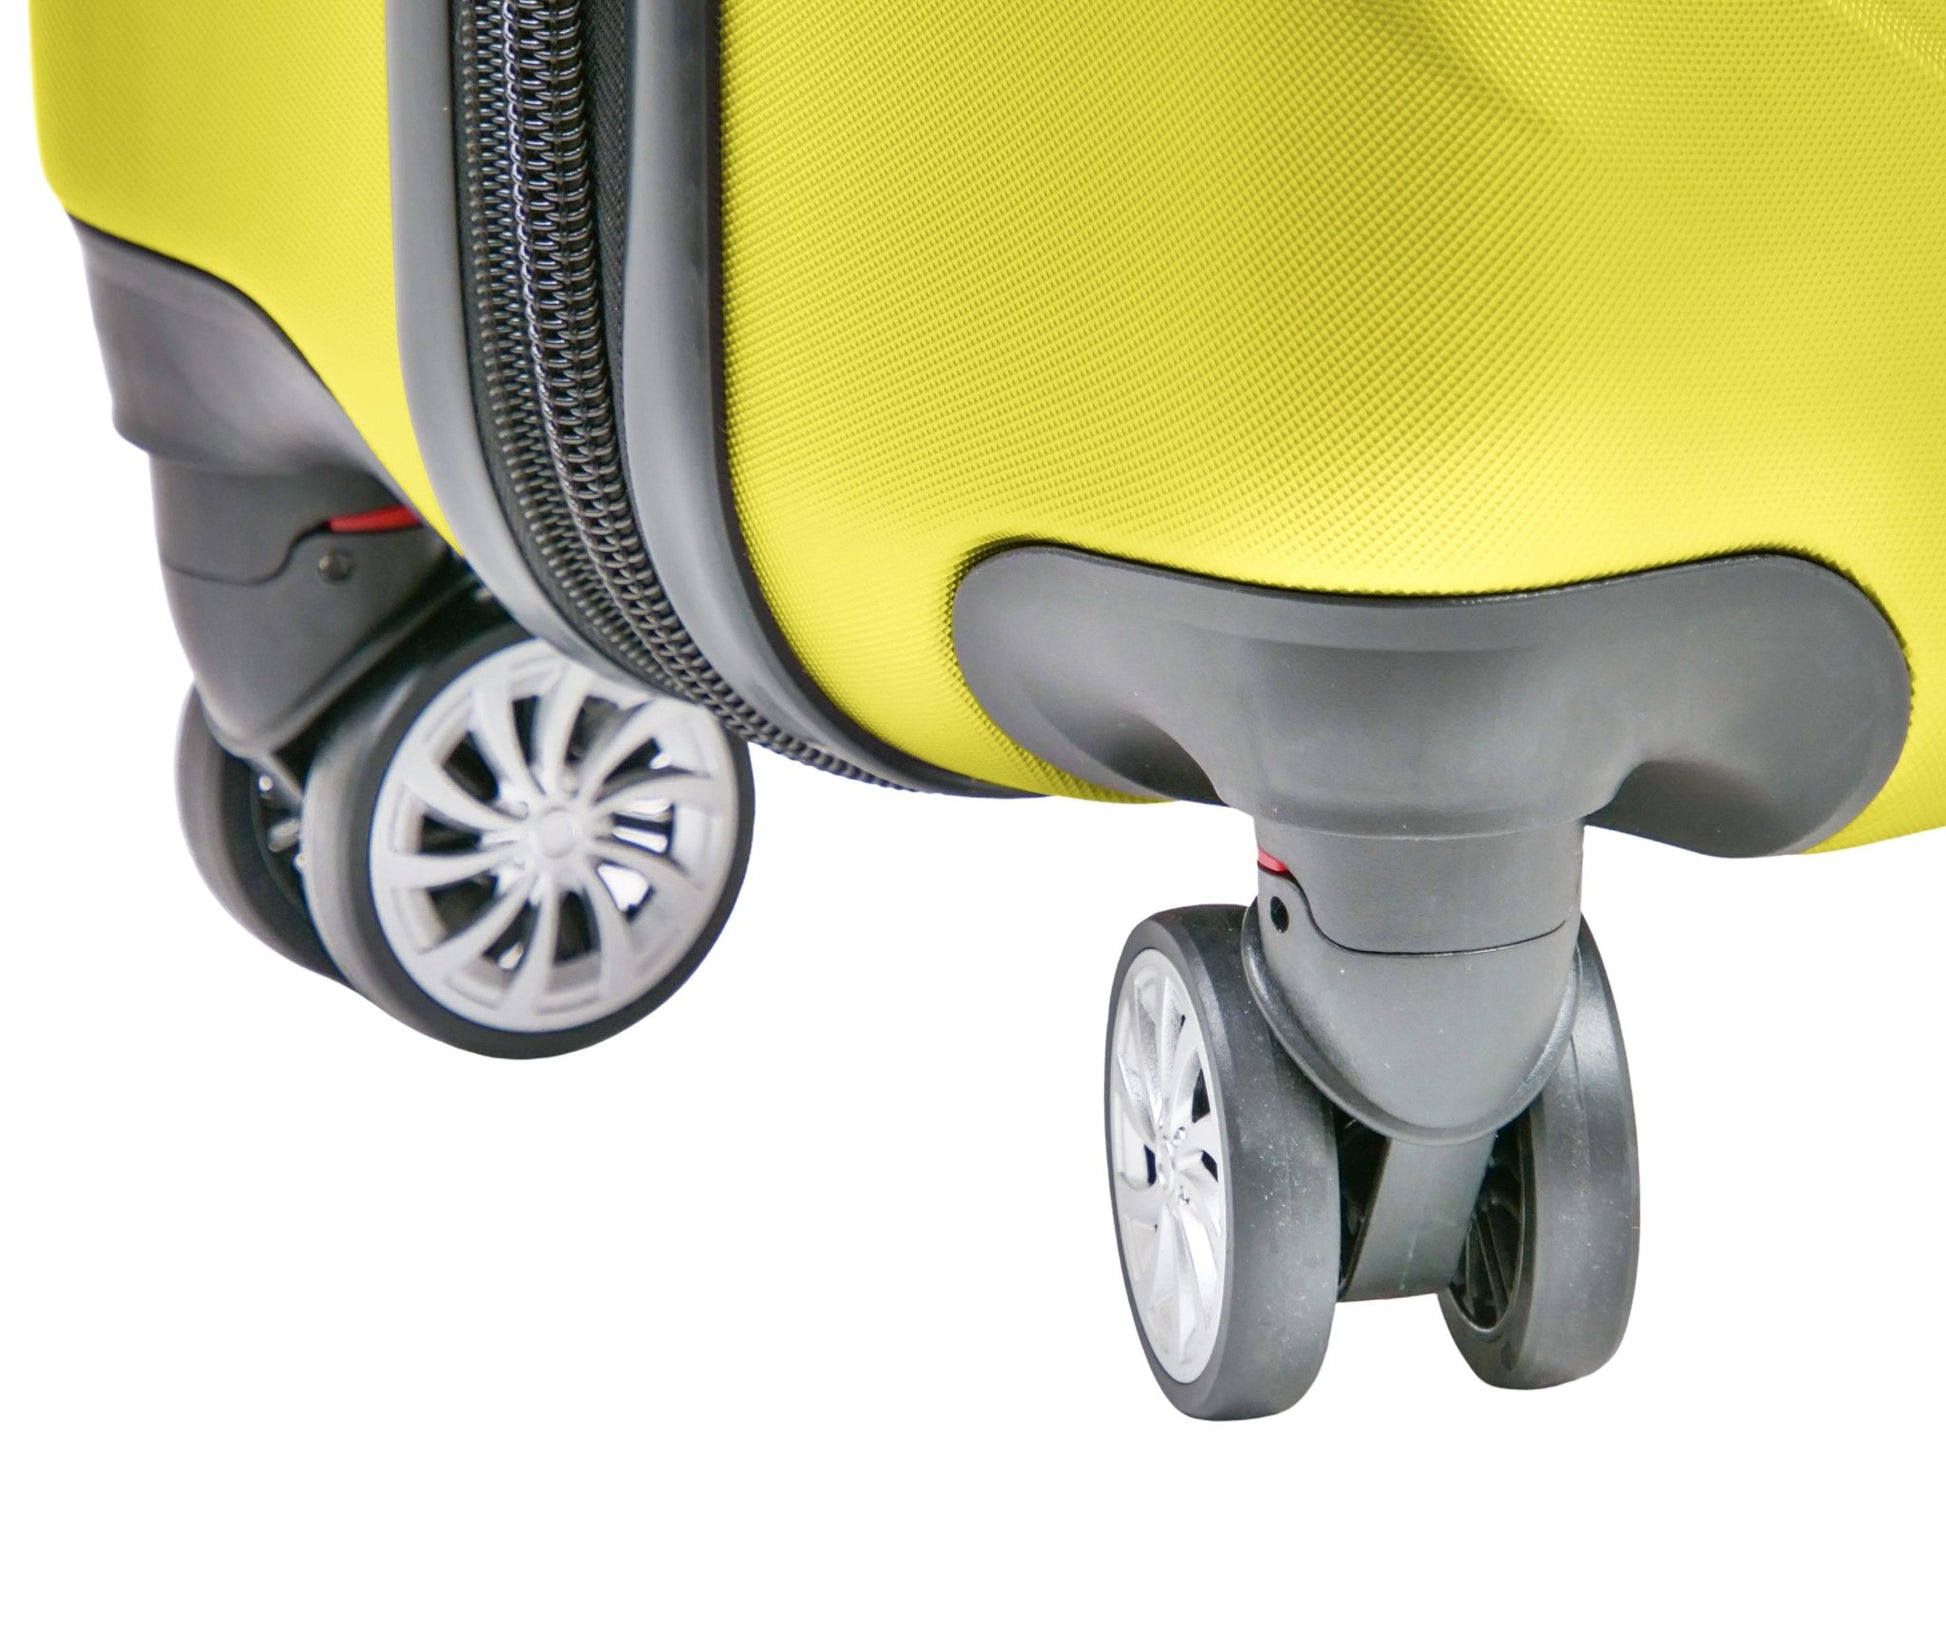 SANTA BARBARA POLO & RAQUET CLUB - מזוודה קשיחה גדולה 28" דגם 1701 בצבע צהוב - MASHBIR//365